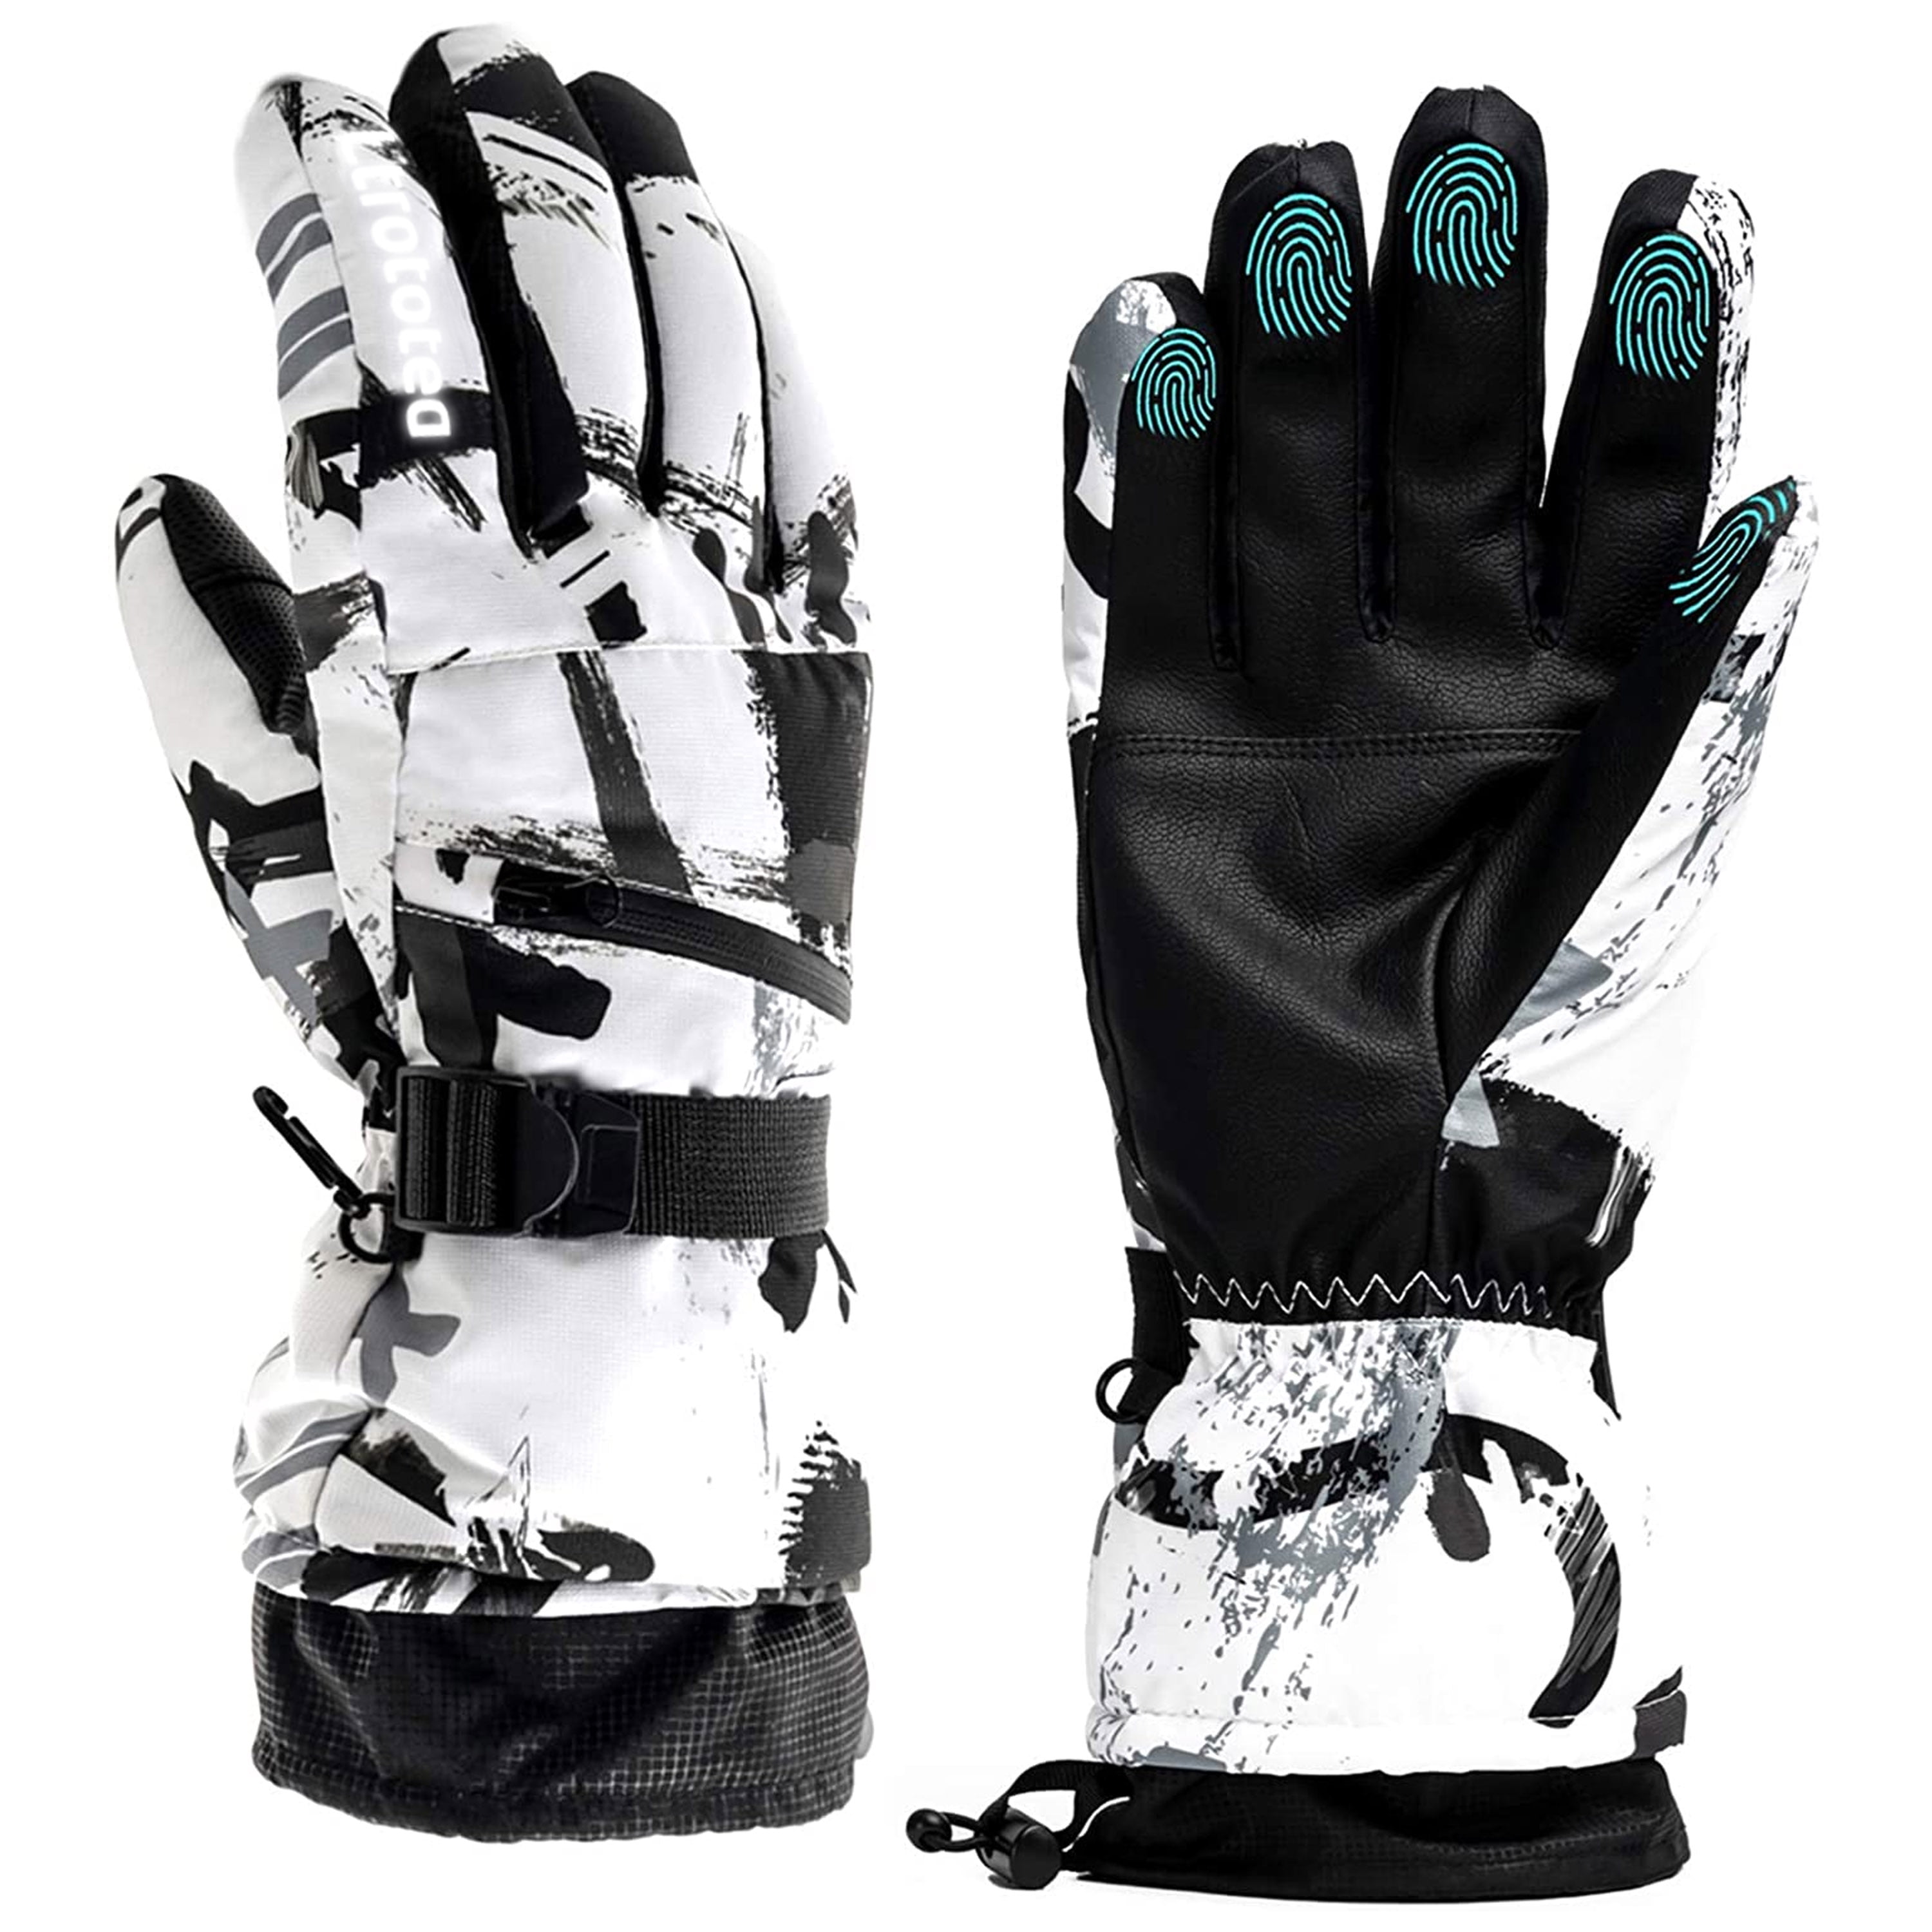 30 degree Winter Warm Snowboard Ski Gloves Waterproof Riding 3 Finger Ski Glove 